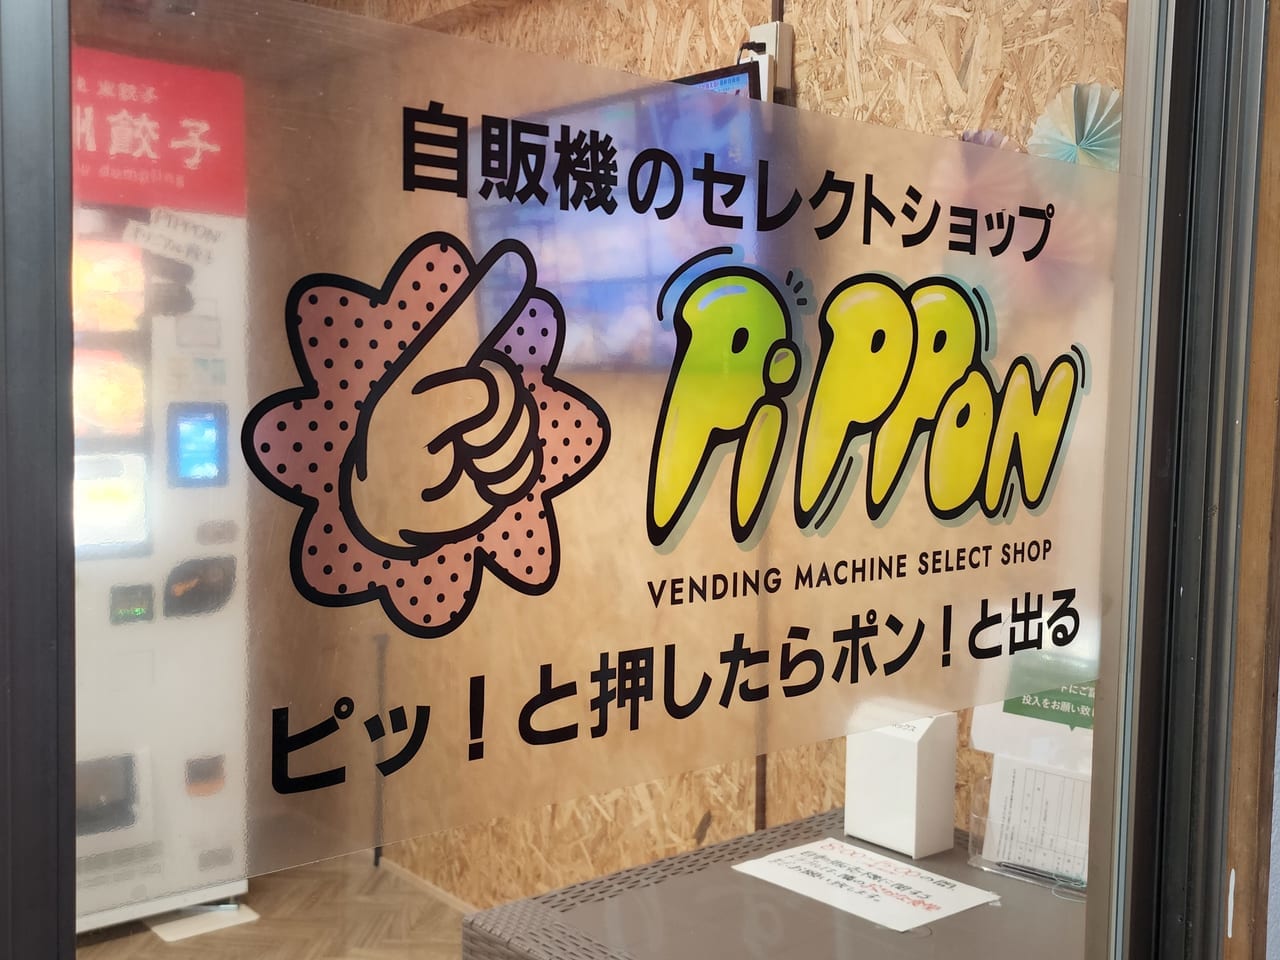 「PiPPon！徳島中洲店」